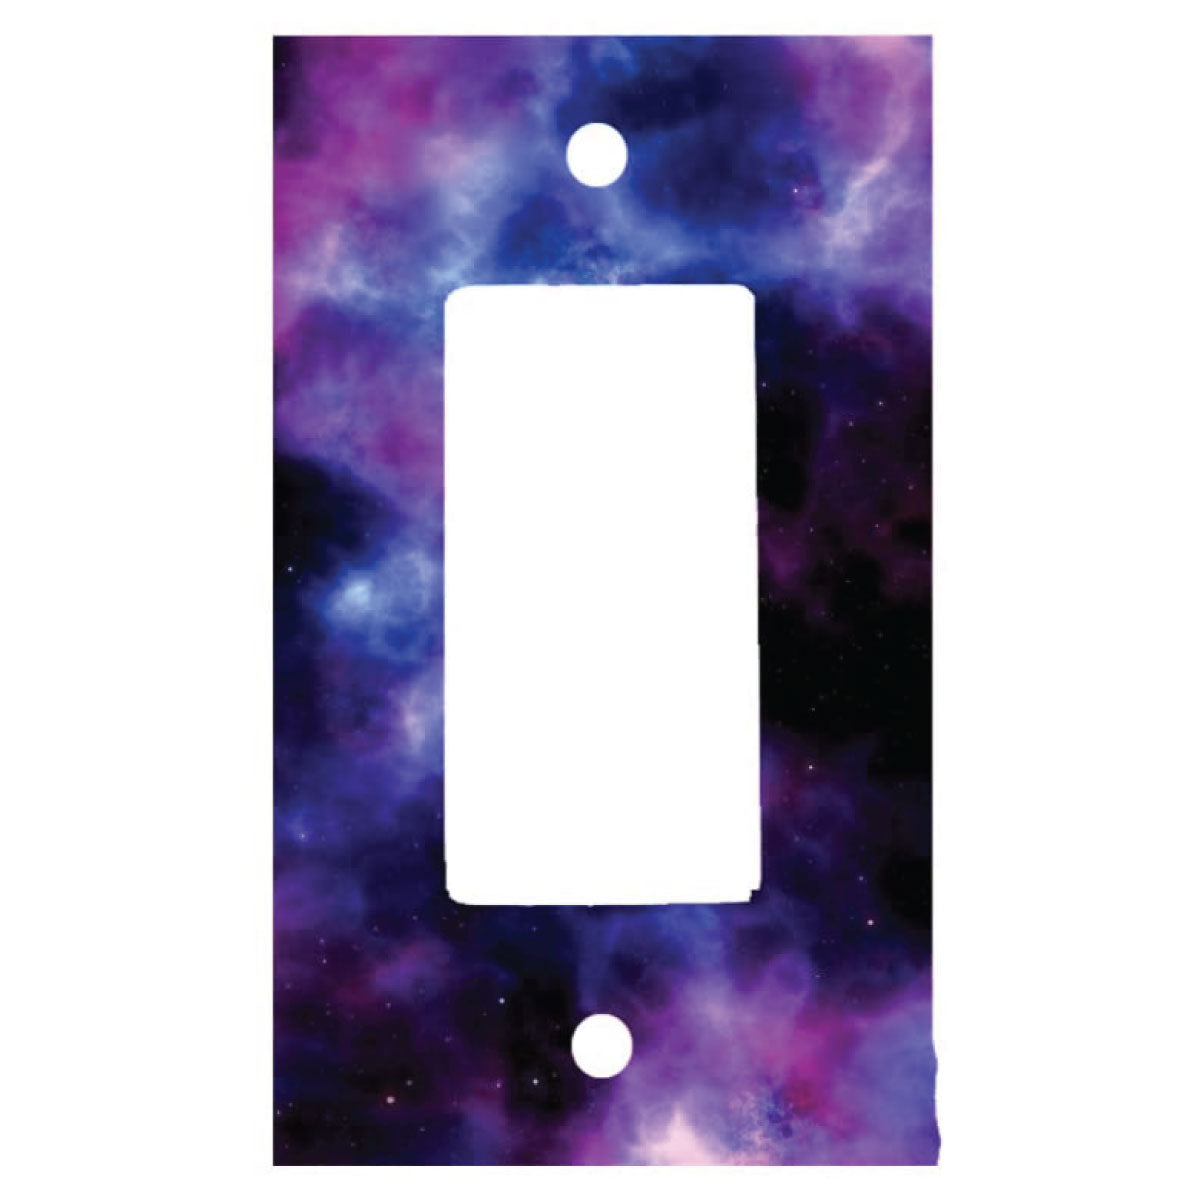 Galaxy Nebula Universe Space, Single Gang Rocker Decorator Dimmer Wall Plate, Black Purple, 2.94 x 4.69 inches